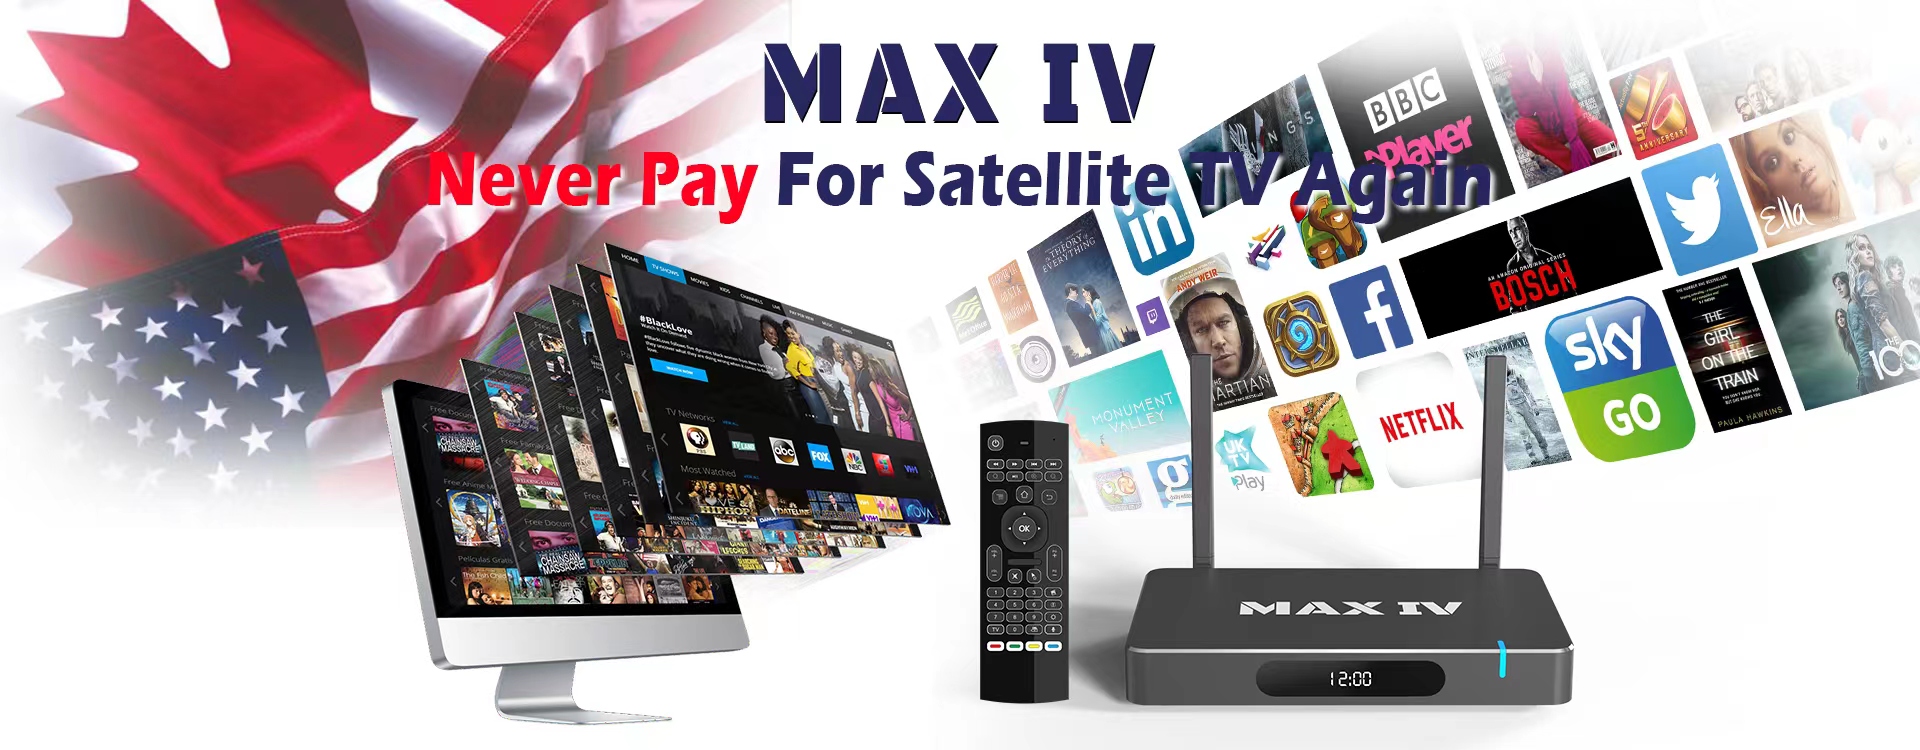 Octastream Max 4 USA IPTV Box with unlimited IPTV service